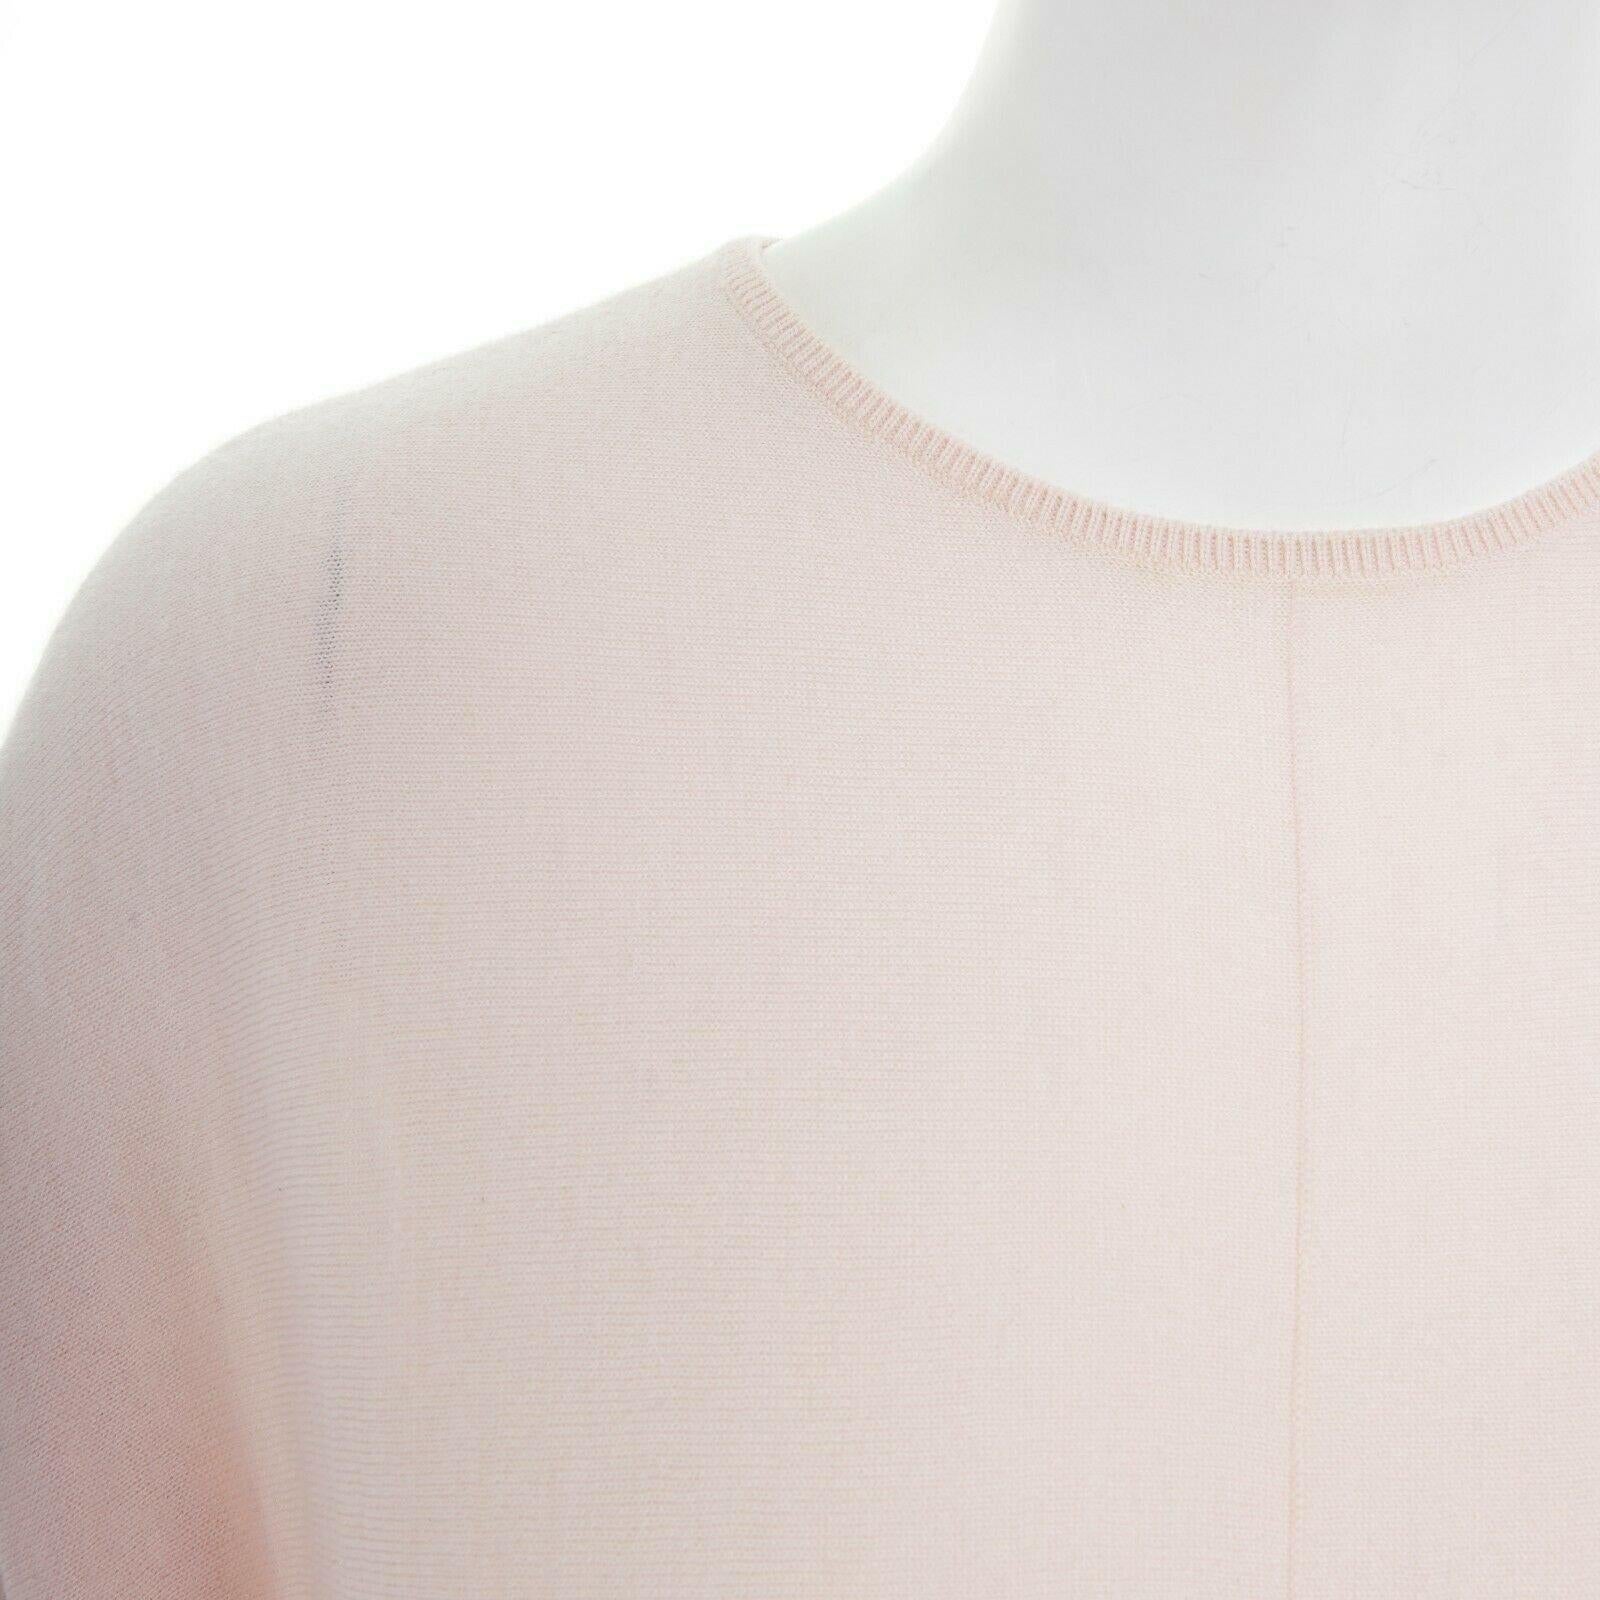 ANTEPRIMA 100% cashmere light pink dual pocket long sleeve boxy sweater top IT38 3